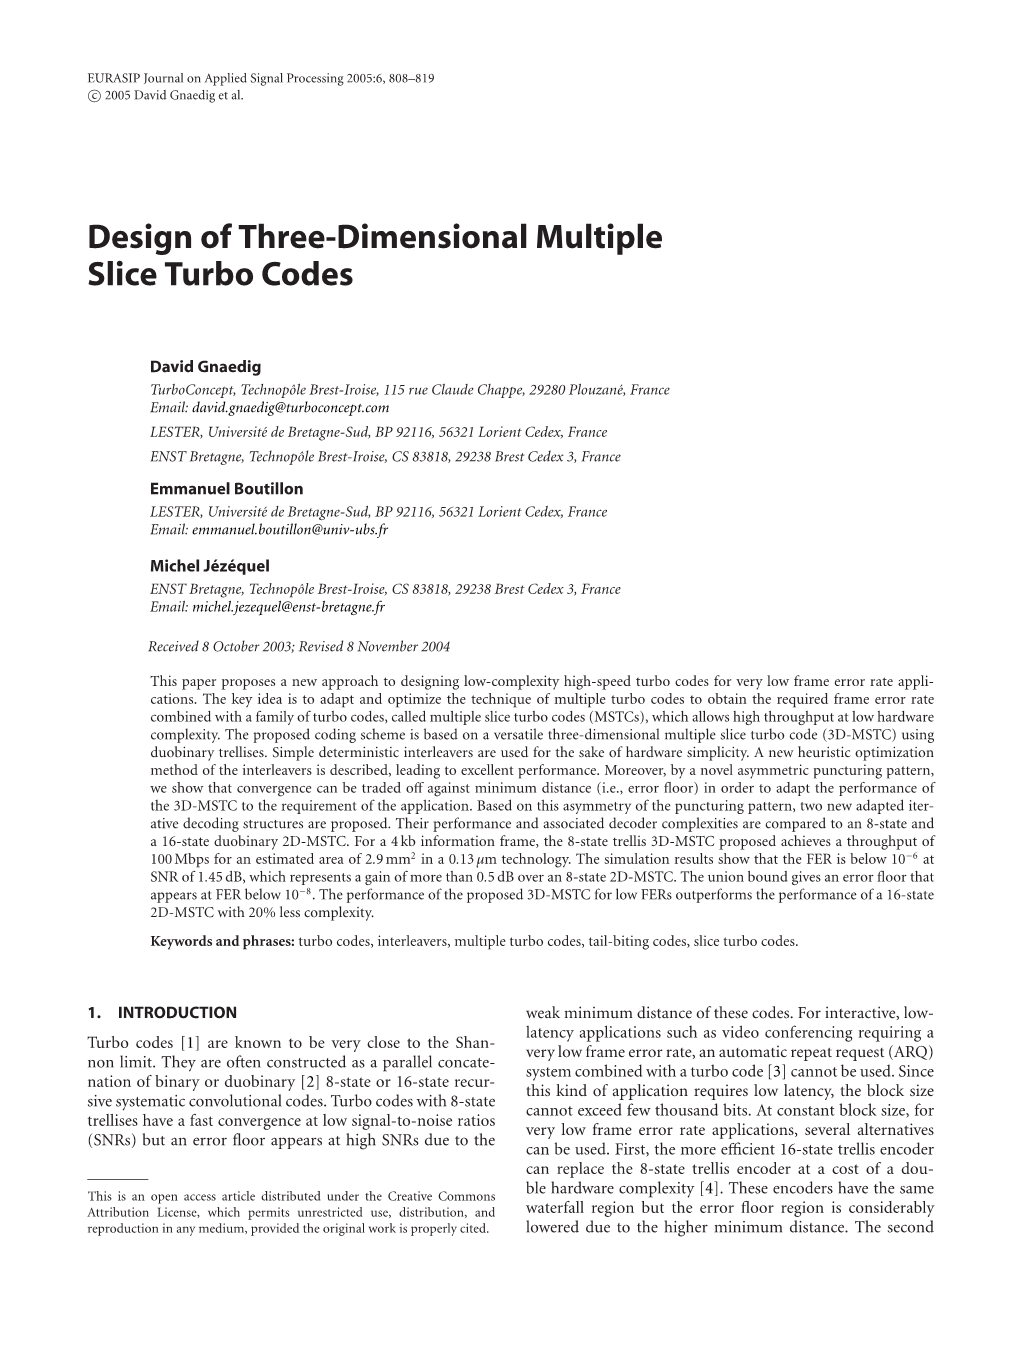 Design of Three-Dimensional Multiple Slice Turbo Codes